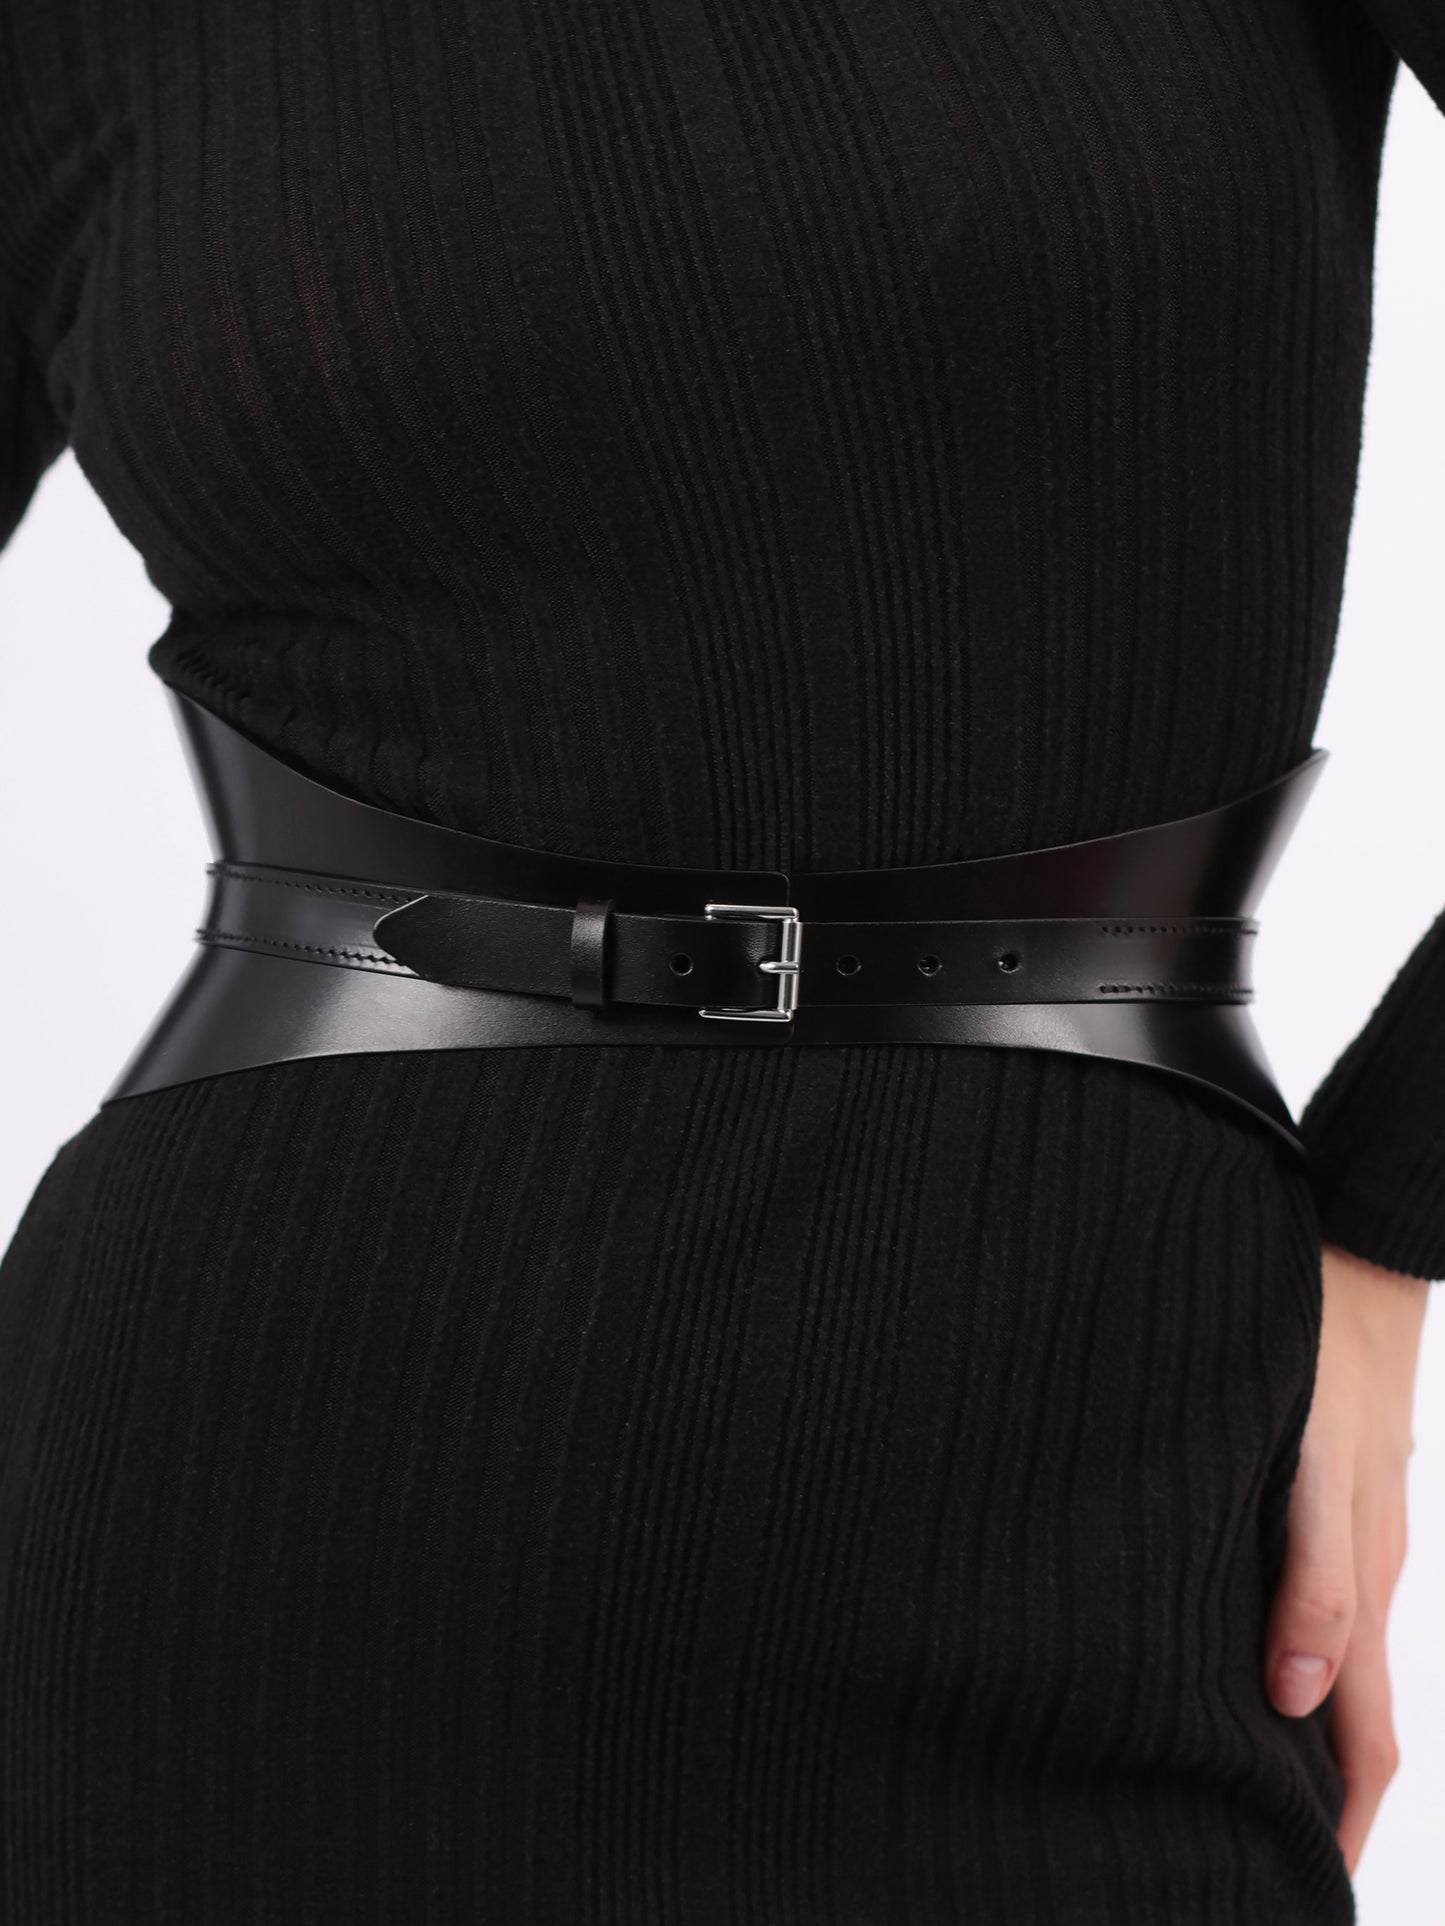 Detailed view of black corset belt.